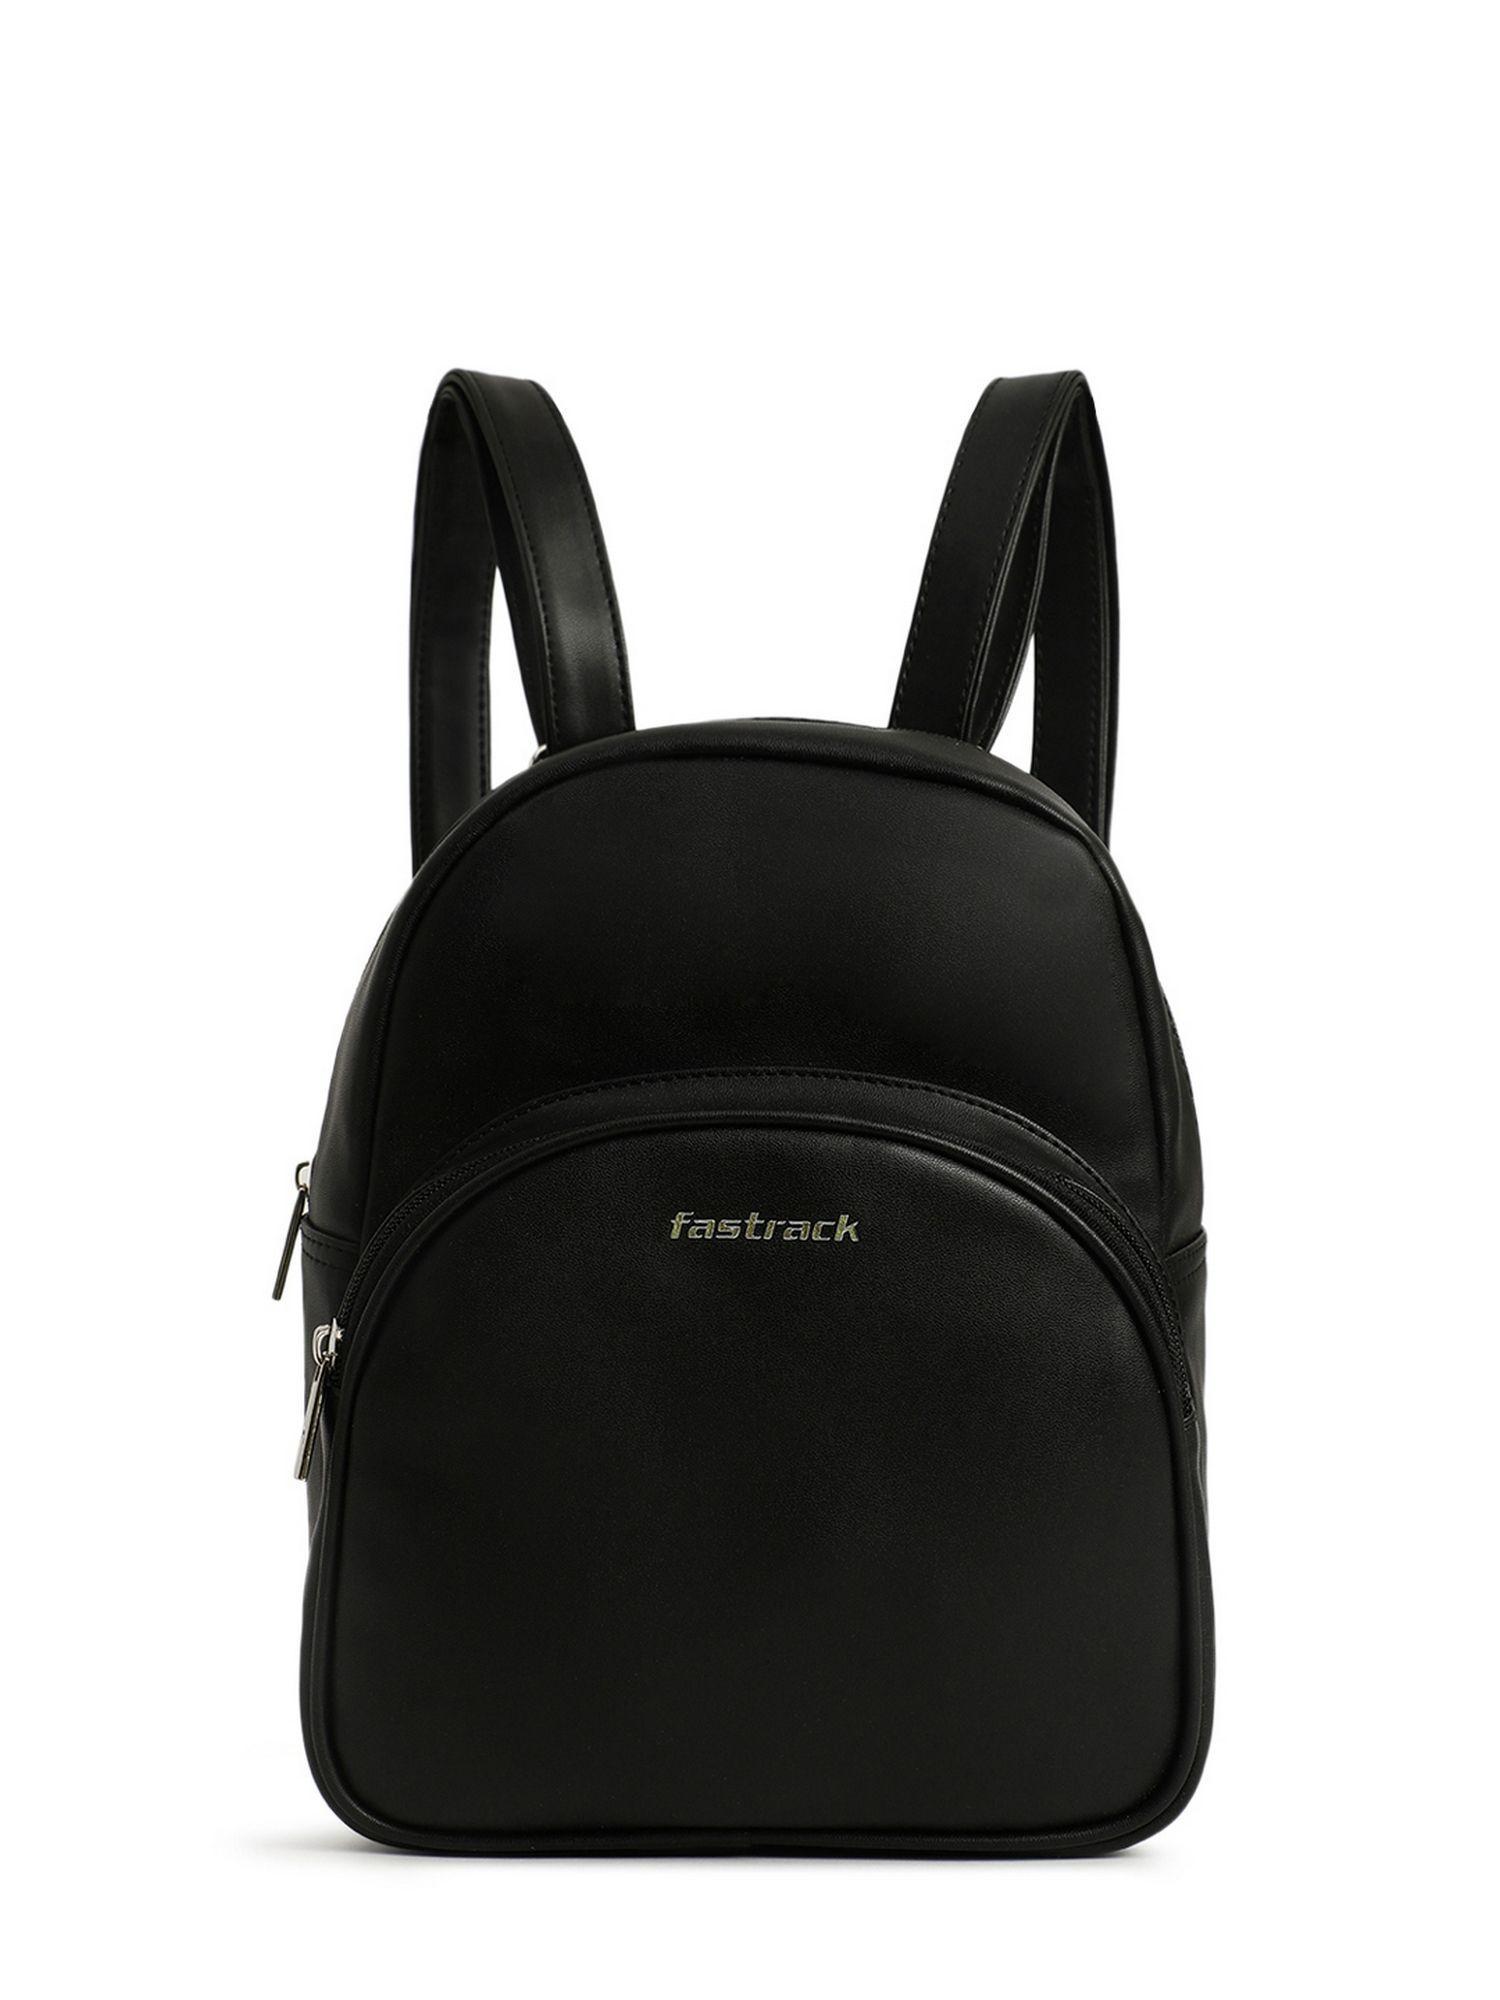 ivory black college backpack bag for women